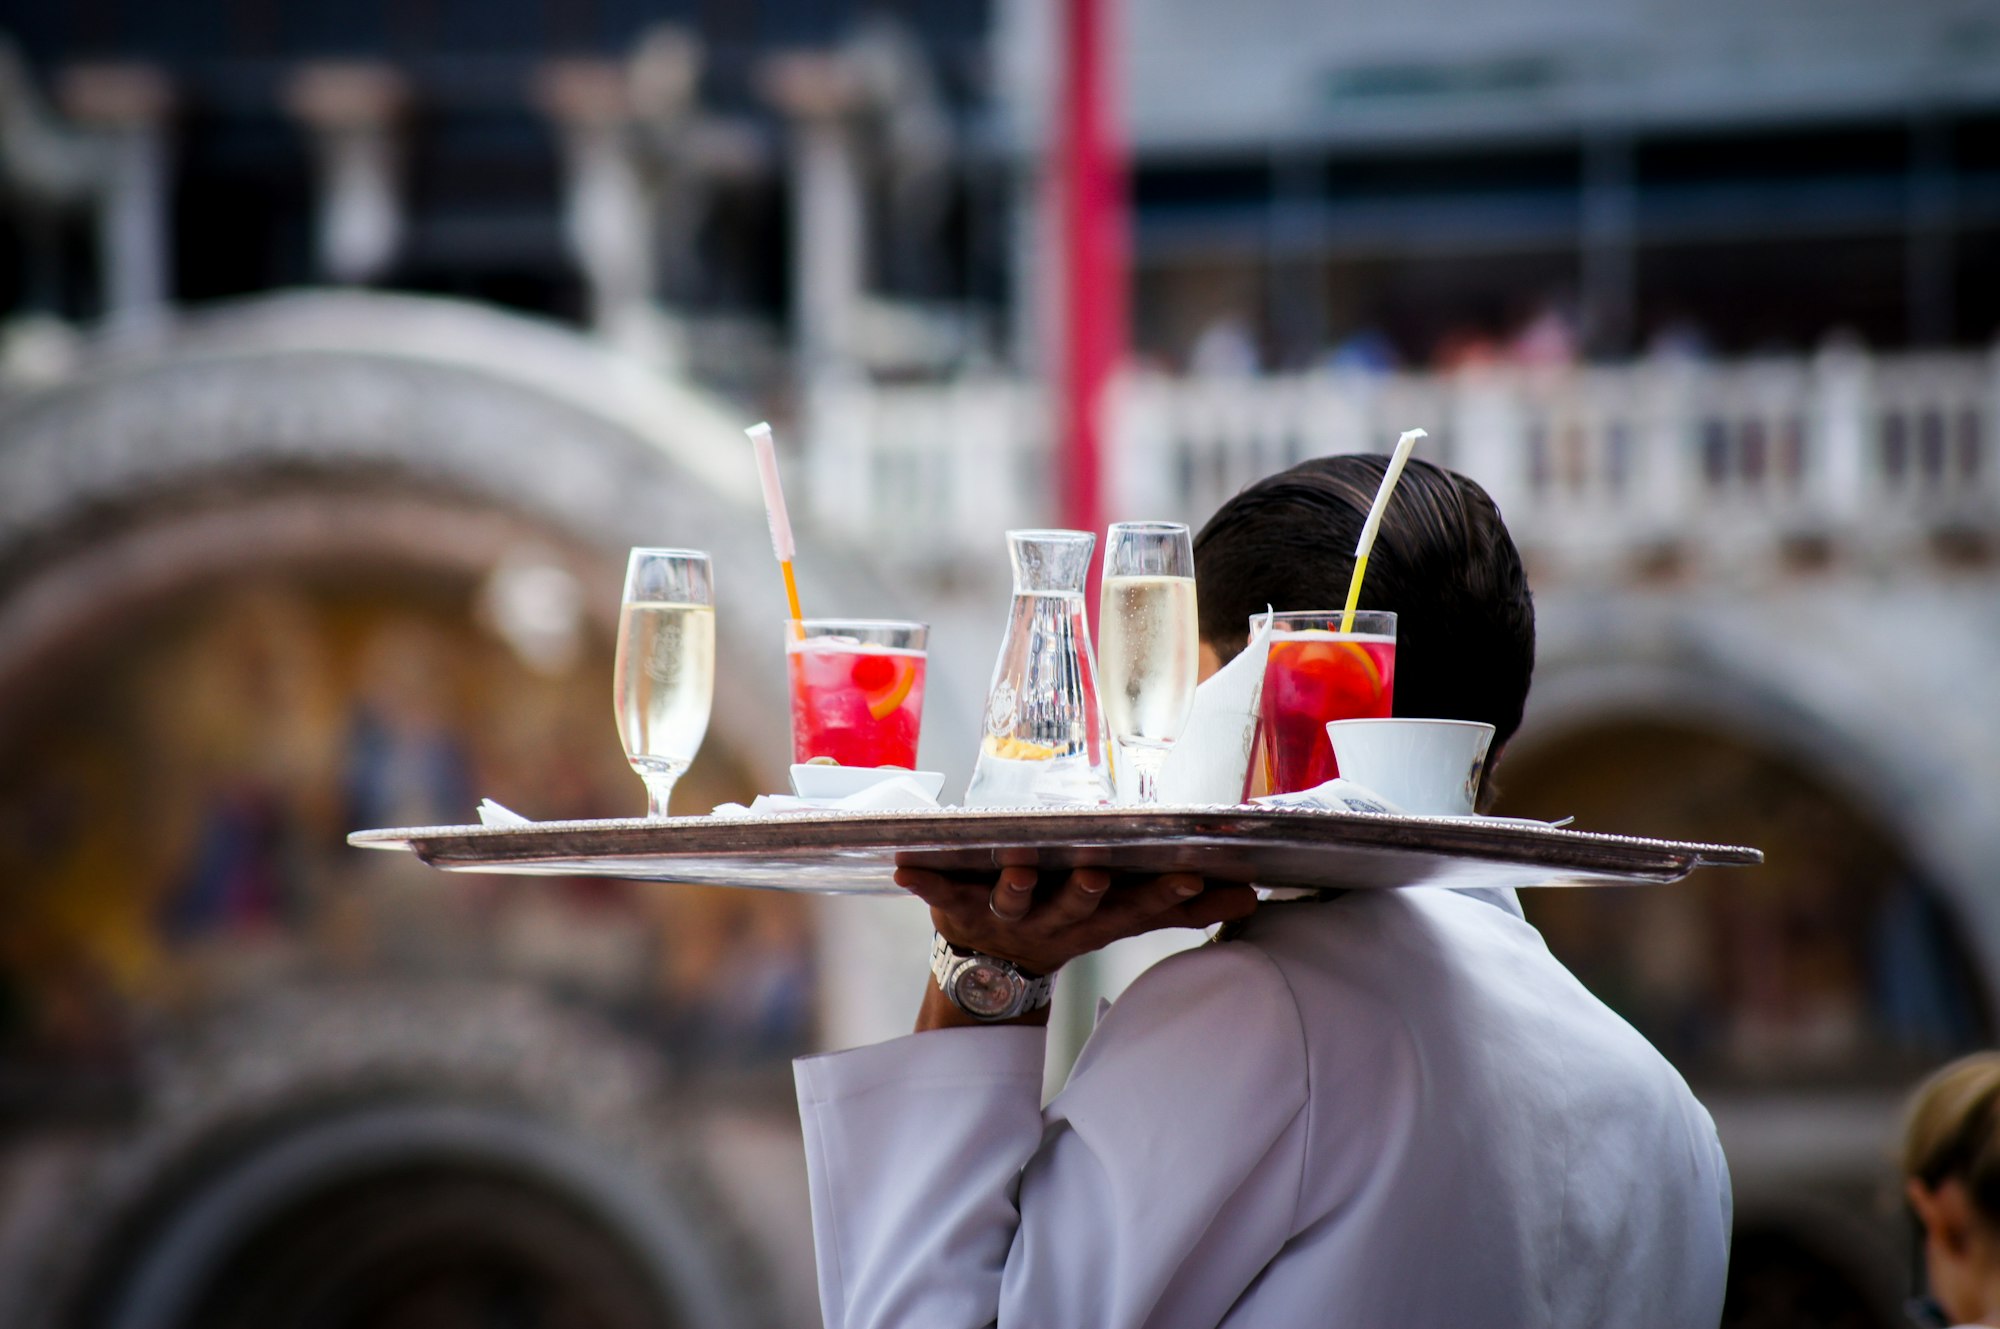 Waiter in a bar restaurant serving drinks and mocktails for patrons.